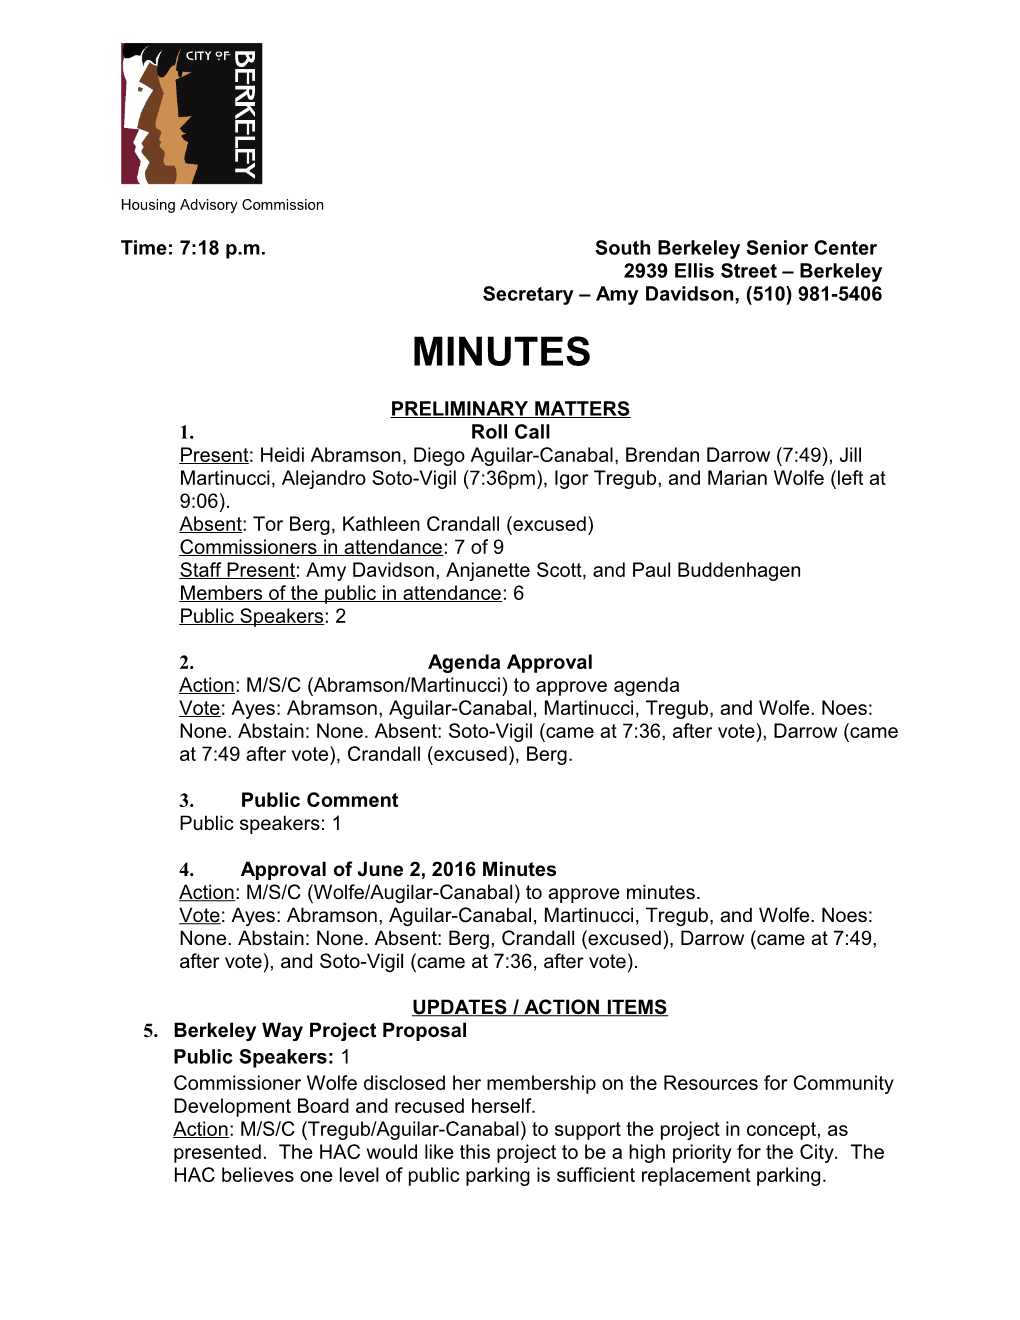 Housing Advisory Commission Regular Meeting Draft Minutes